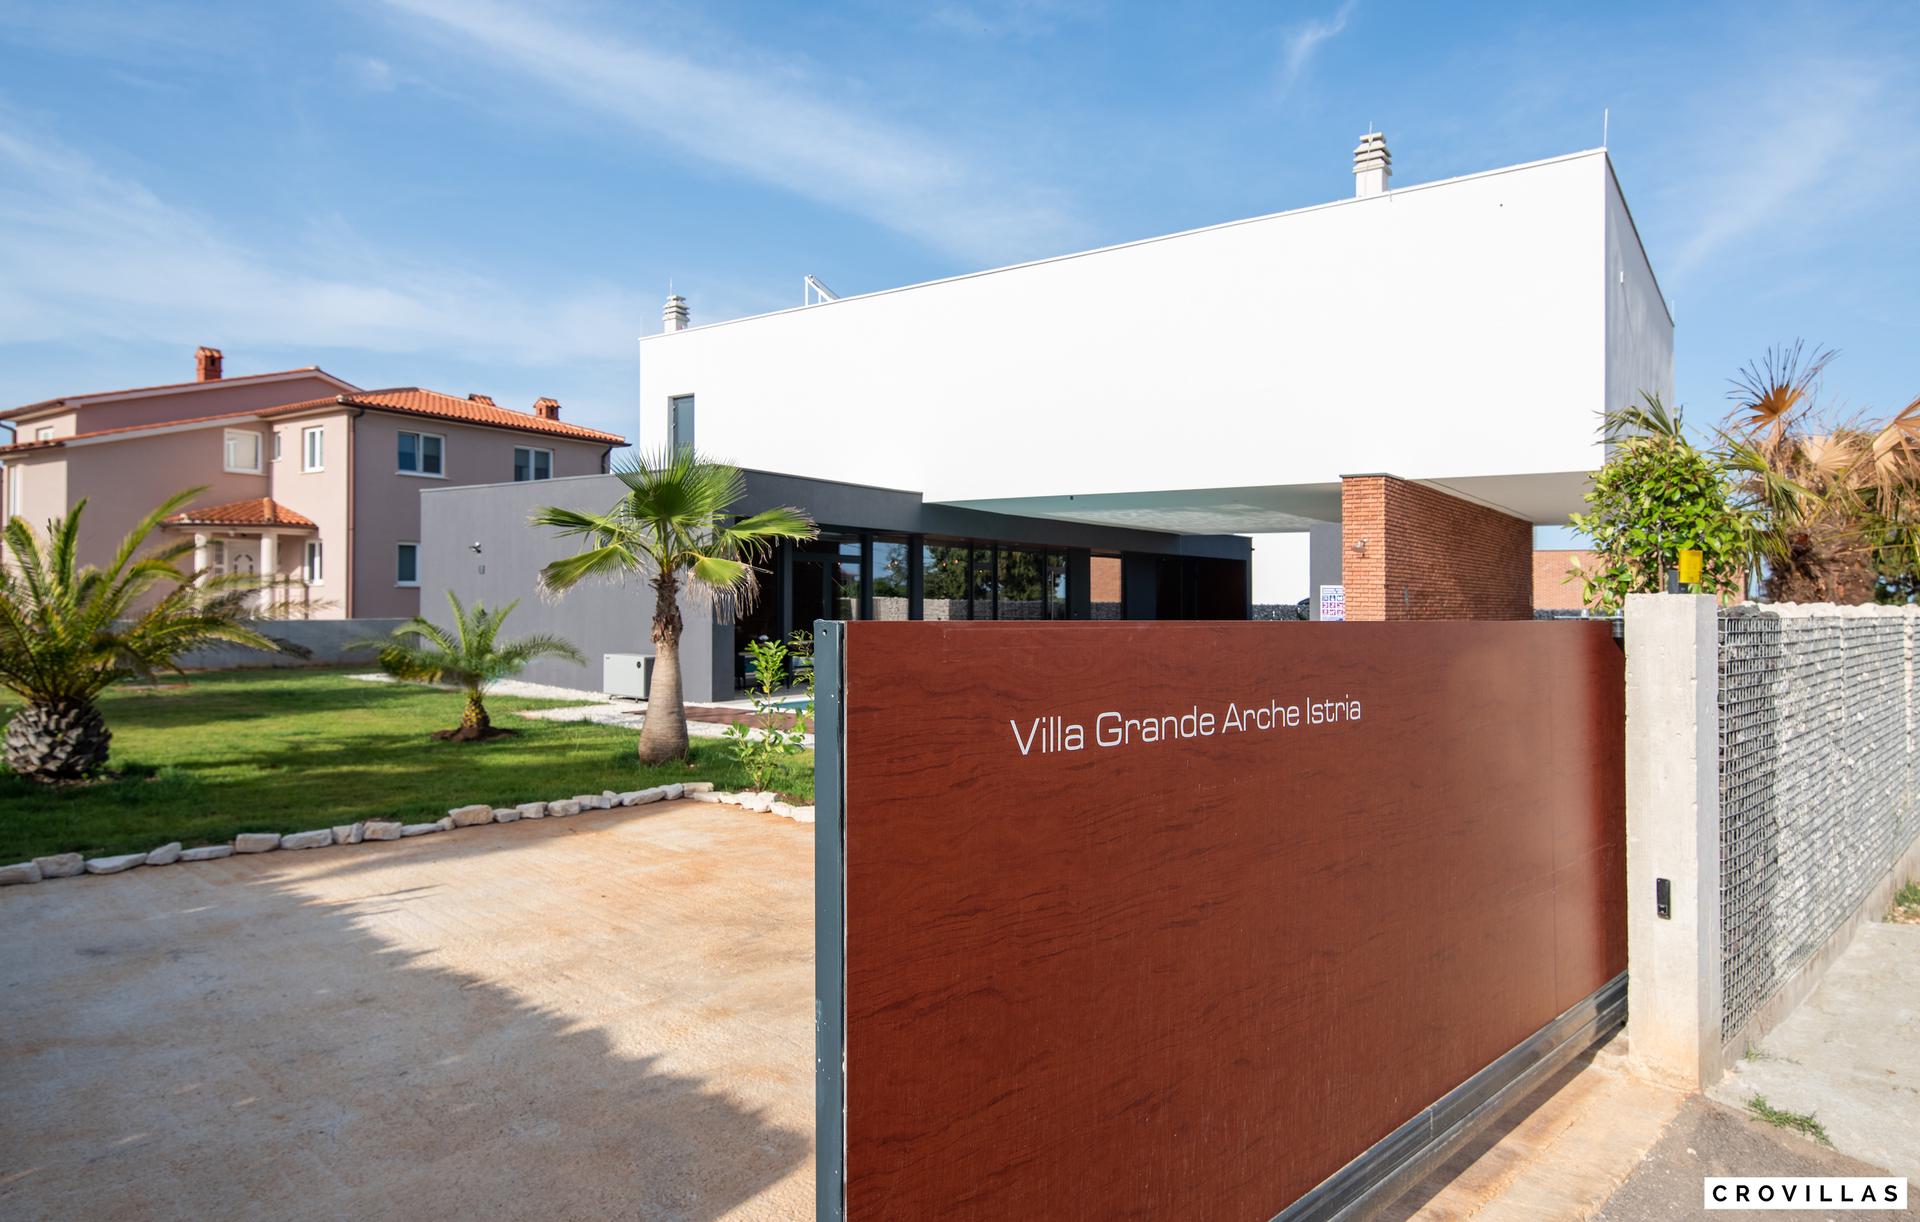 Vila Grande Arche: Highlights